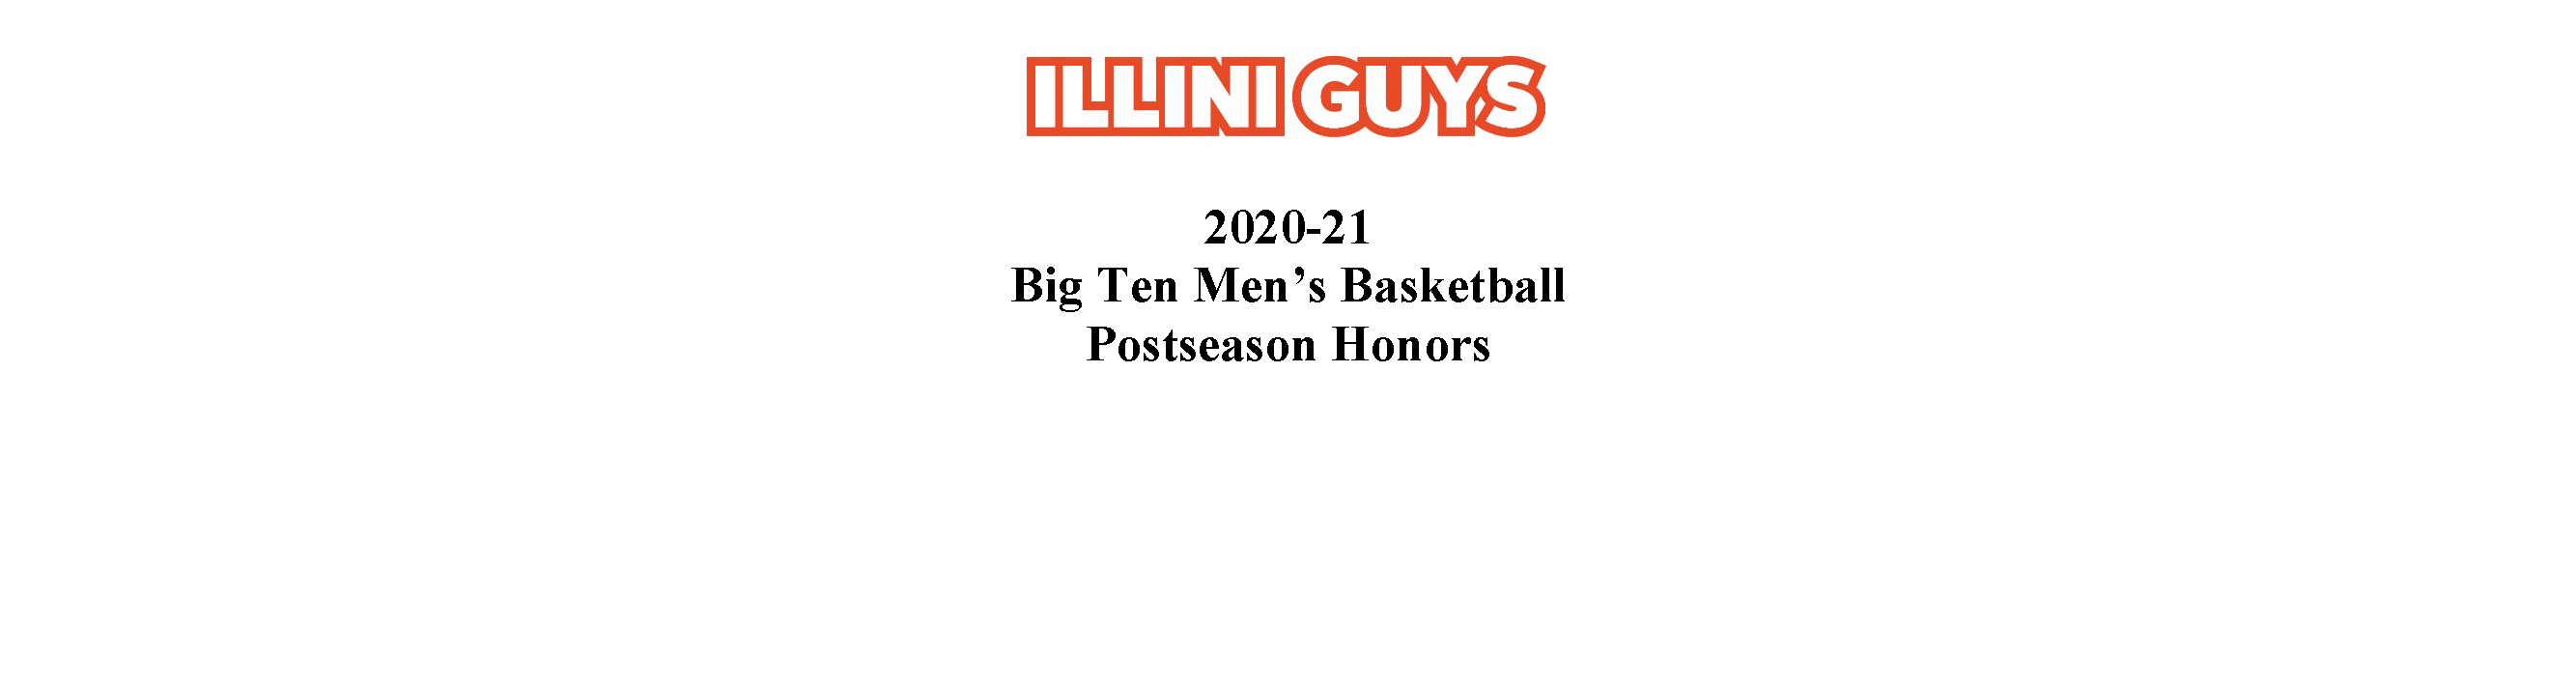 IlliniGuys.com announces 2020-21 Big Ten Men’s Basketball Postseason Honors